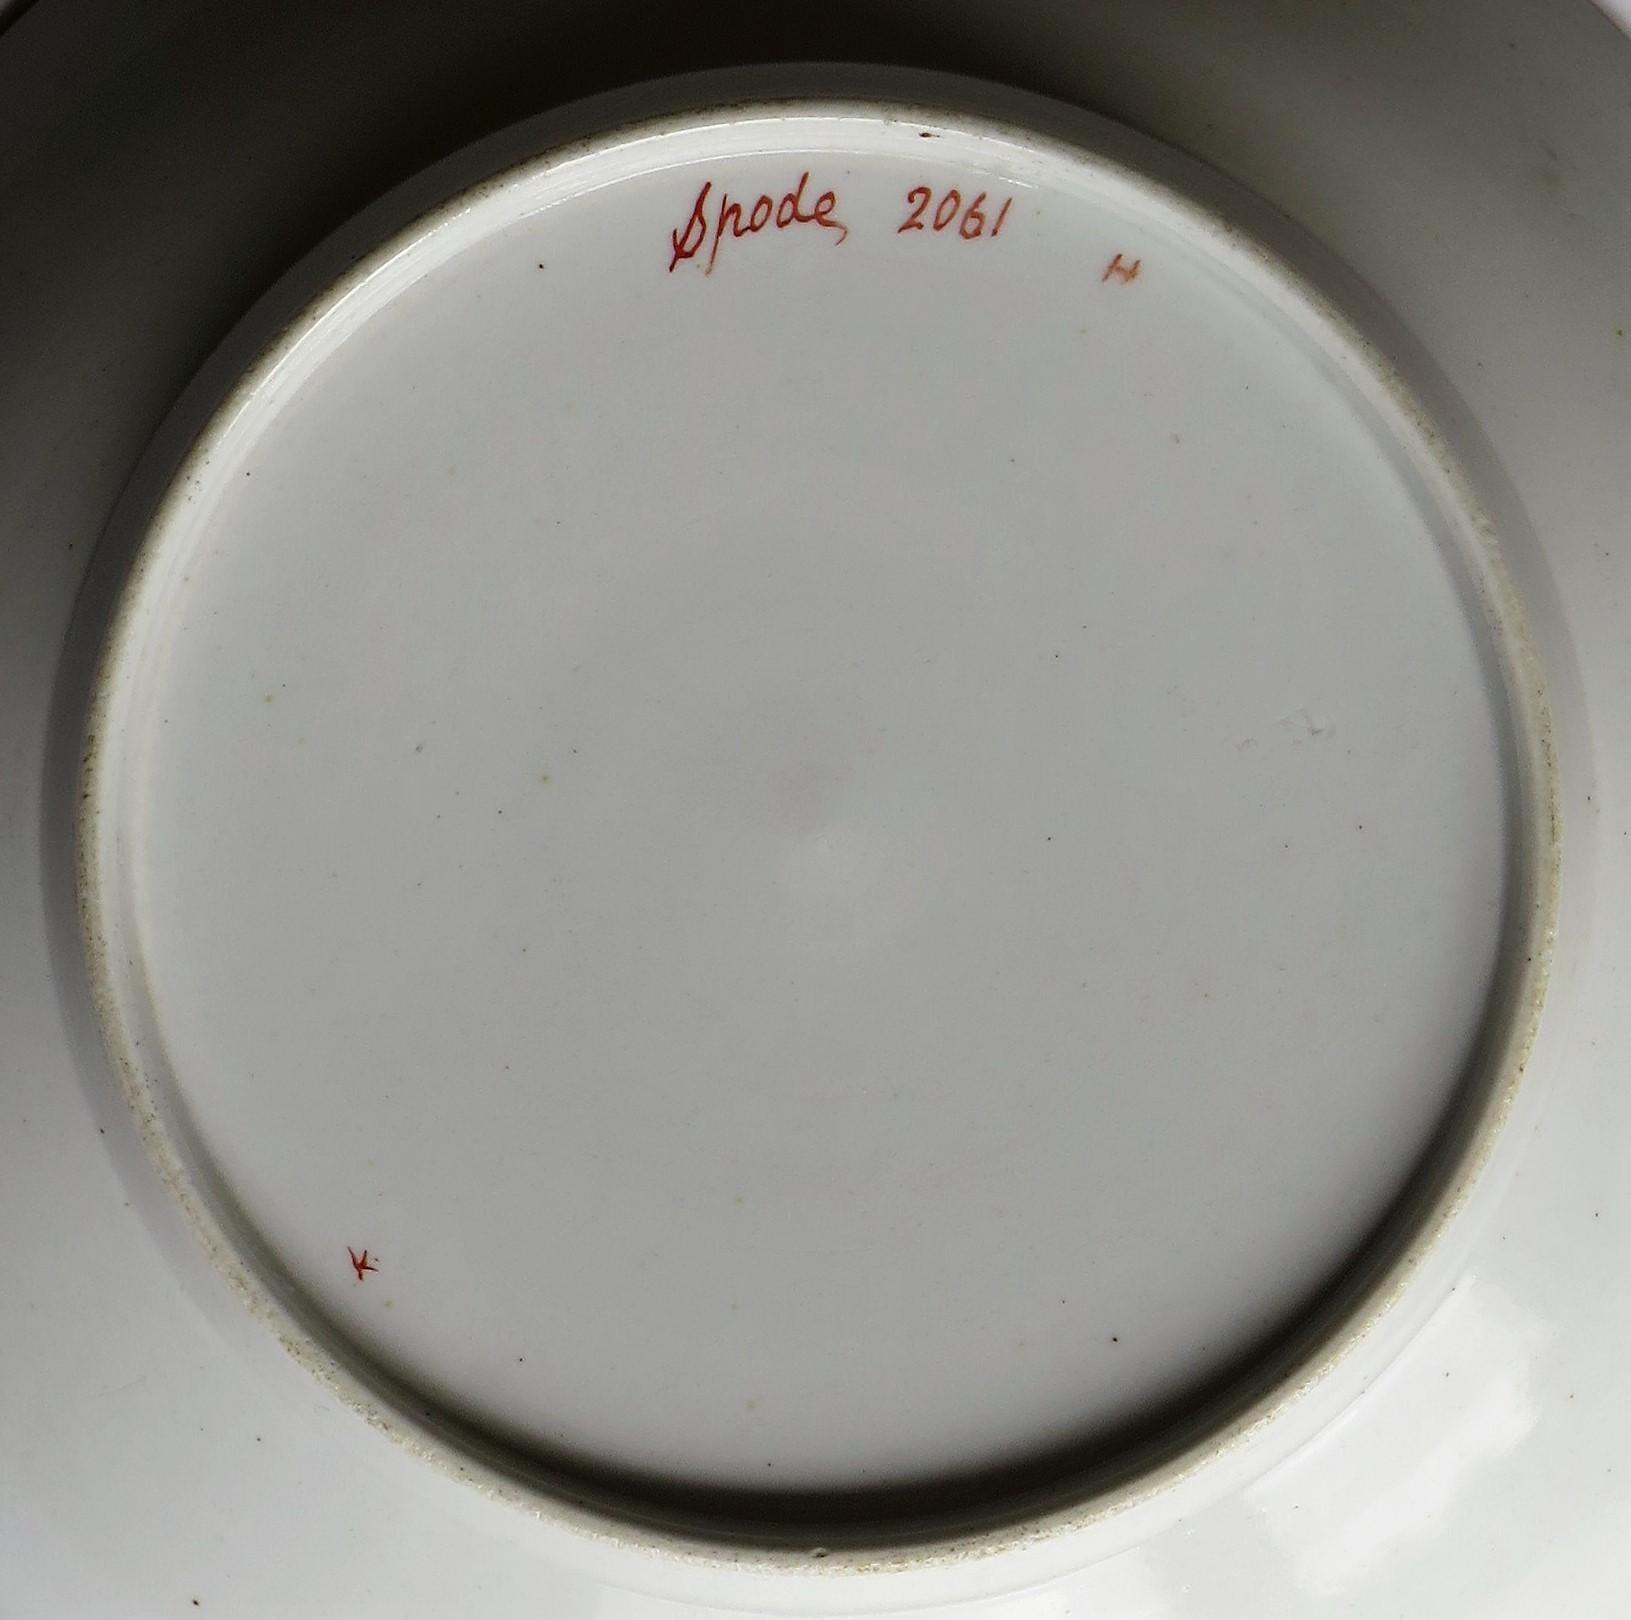 Georgian Spode Deep Plate or Dish Porcelain Tobacco Leaf Pattern 2061 circa 1805 6